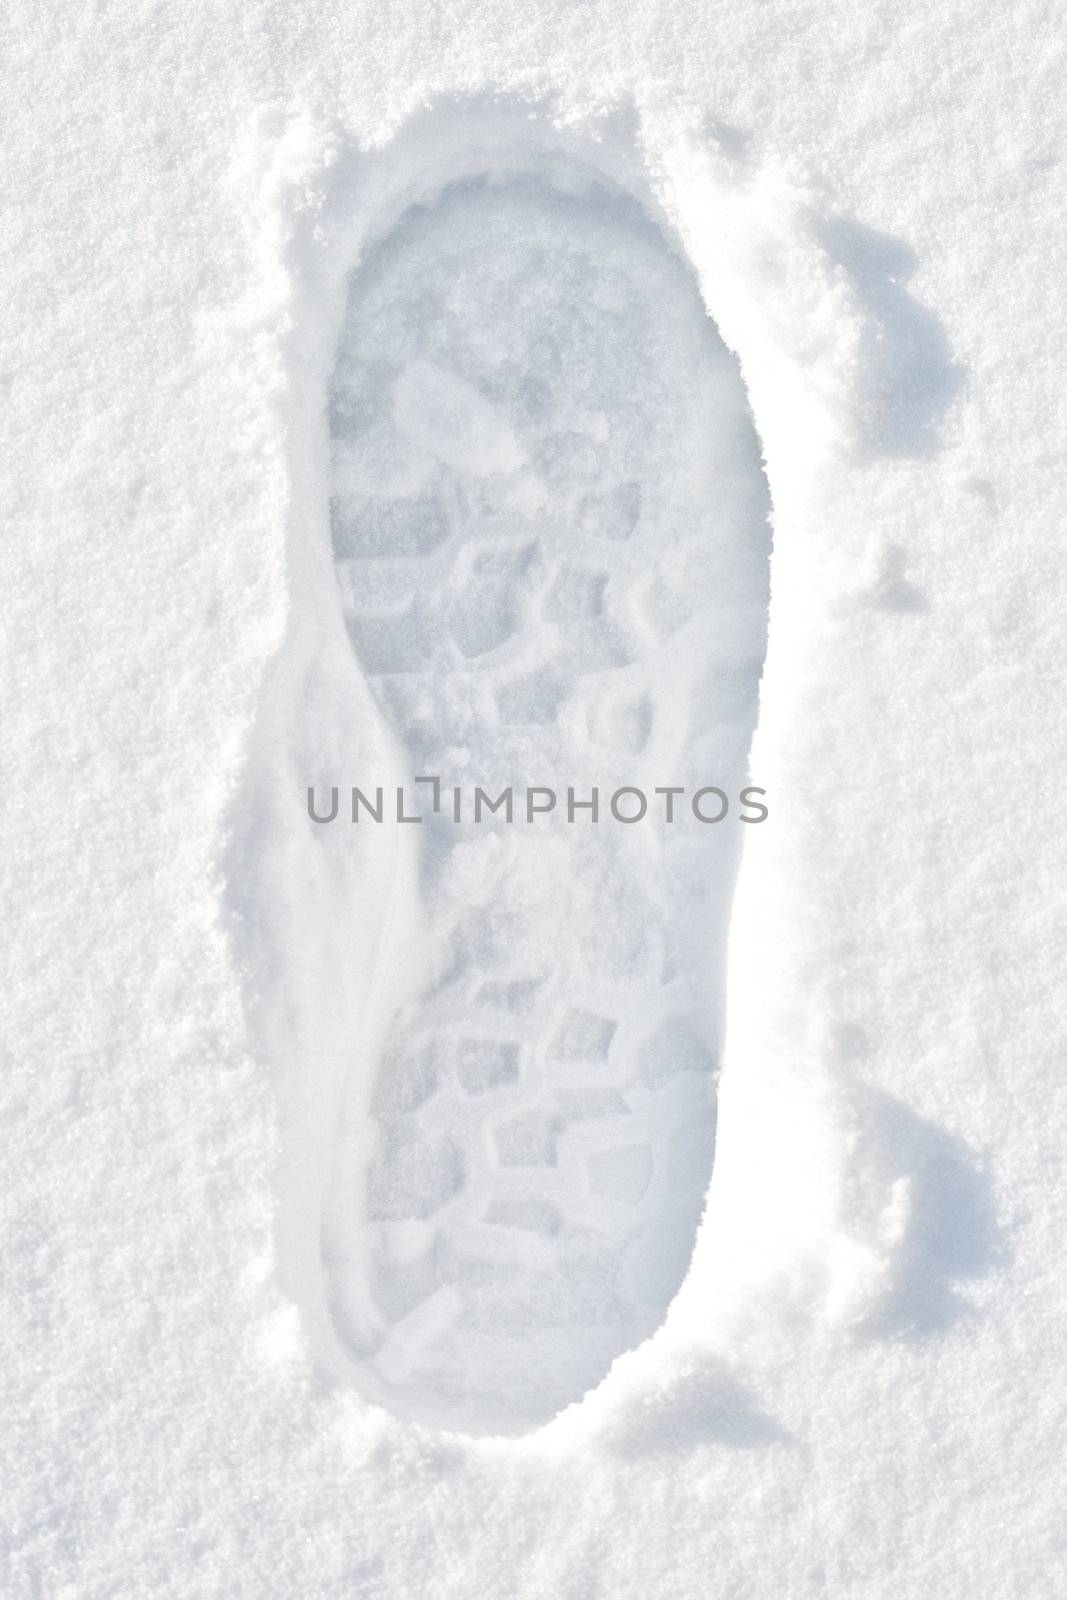 footprint on snow by Alekcey